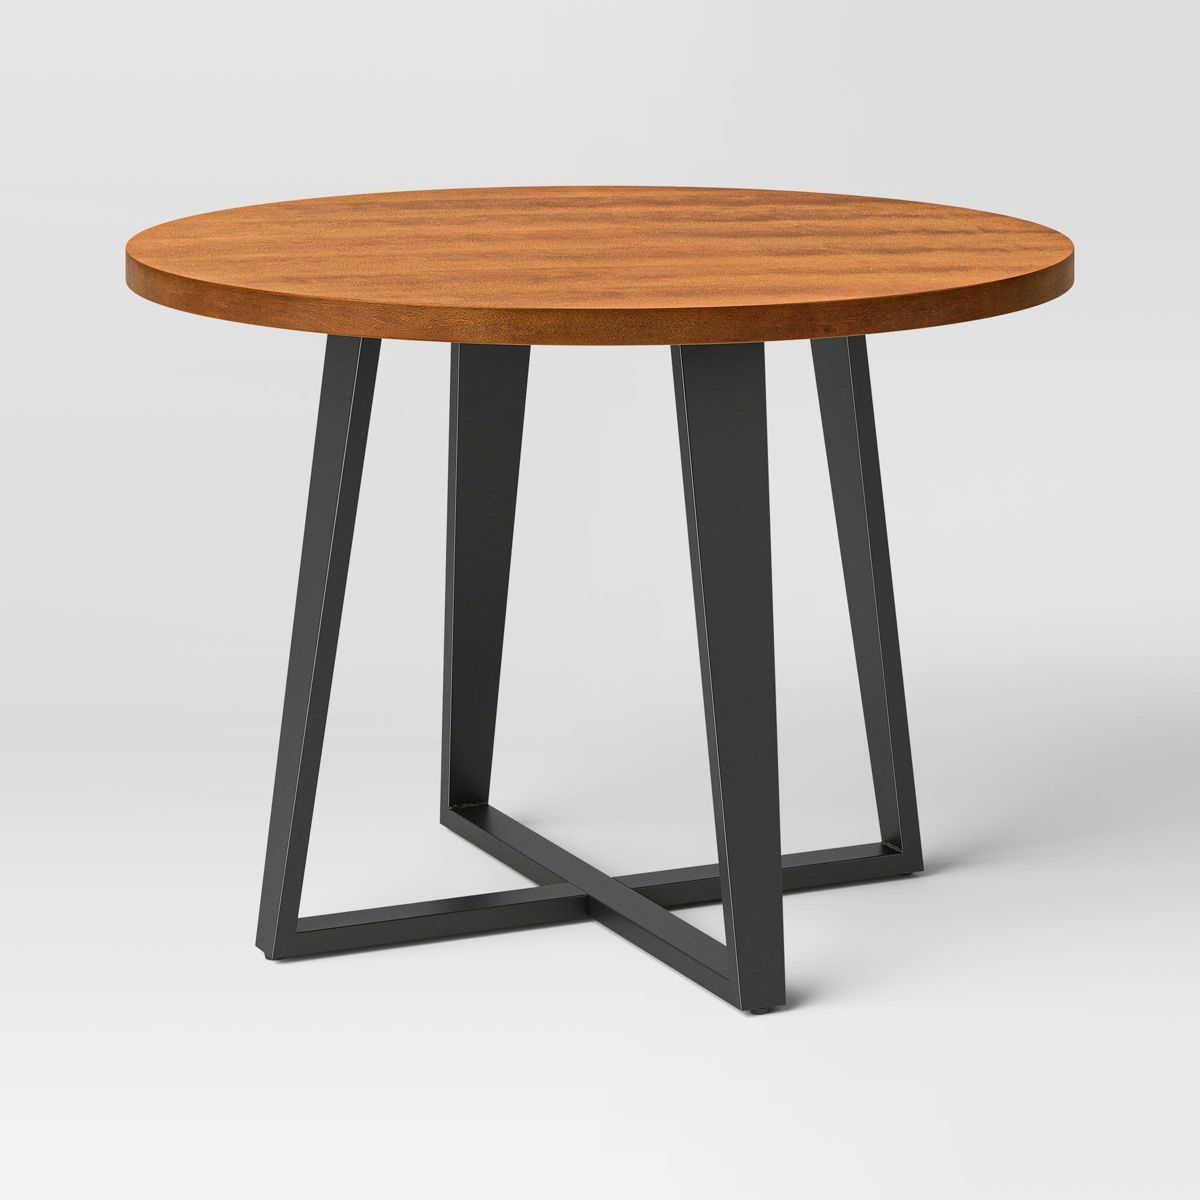 42" Rowan Mixed Material Round Dining Table Natural Wood/Black Metal - Threshold™ | Target